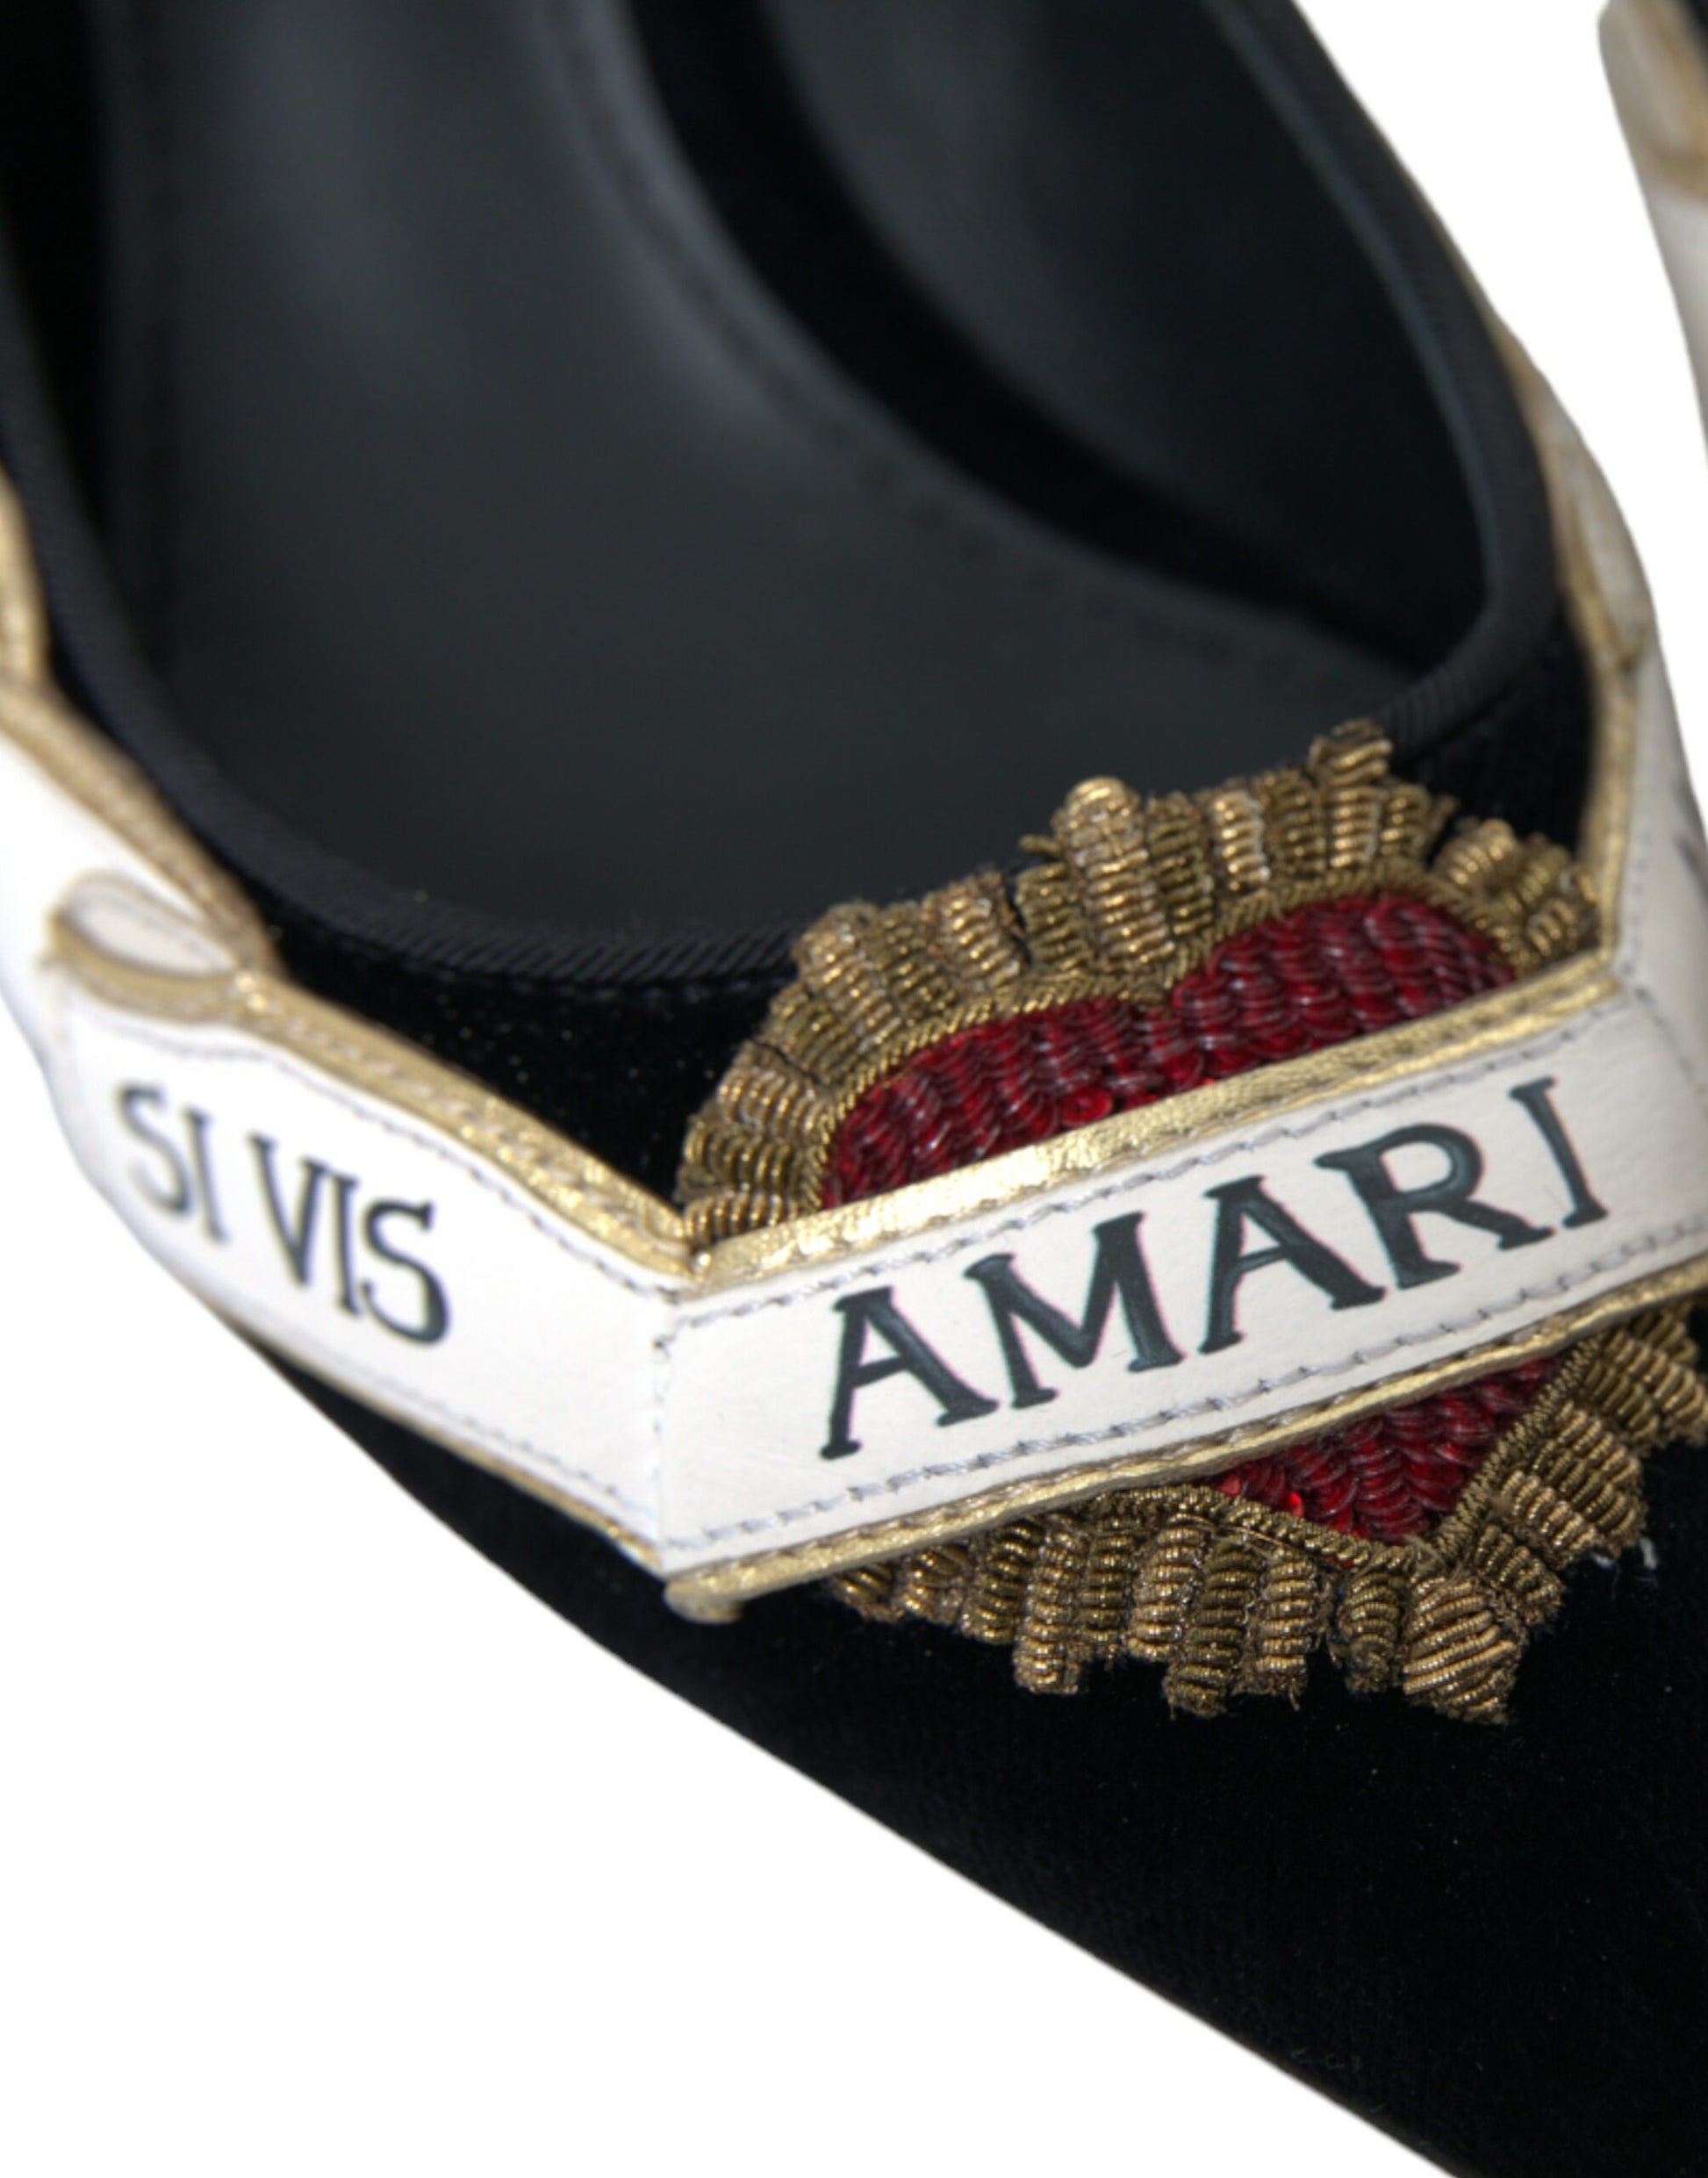 Black Suede Leather Amari Heels Pumps Shoes